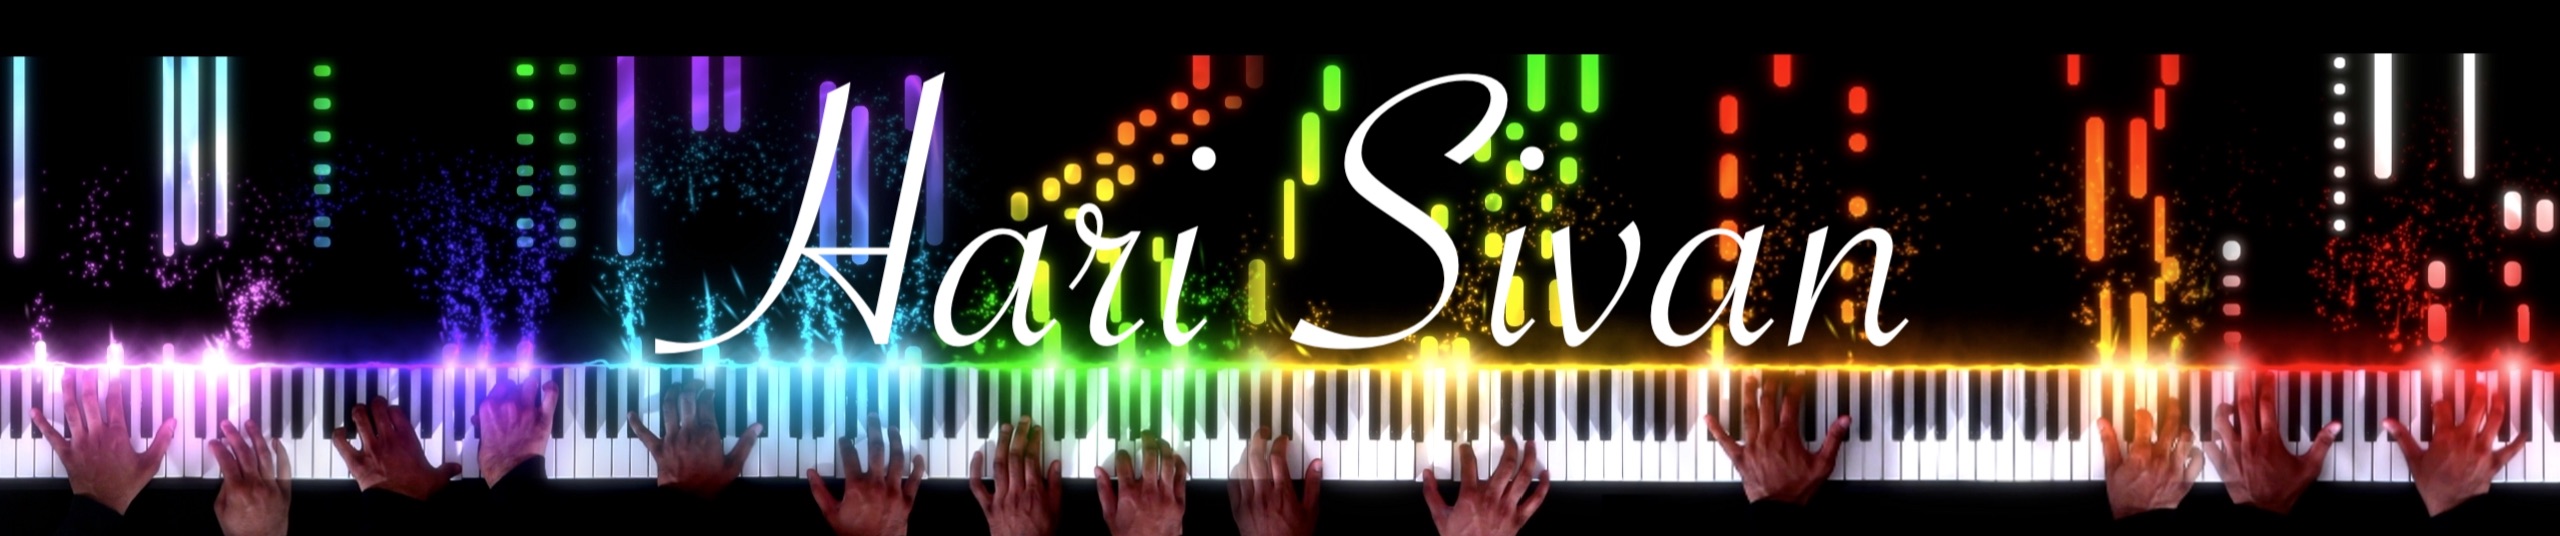 Stream Star Wars: The Last Jedi - Trailer Music - Piano by Hari Sivan |  Listen online for free on SoundCloud